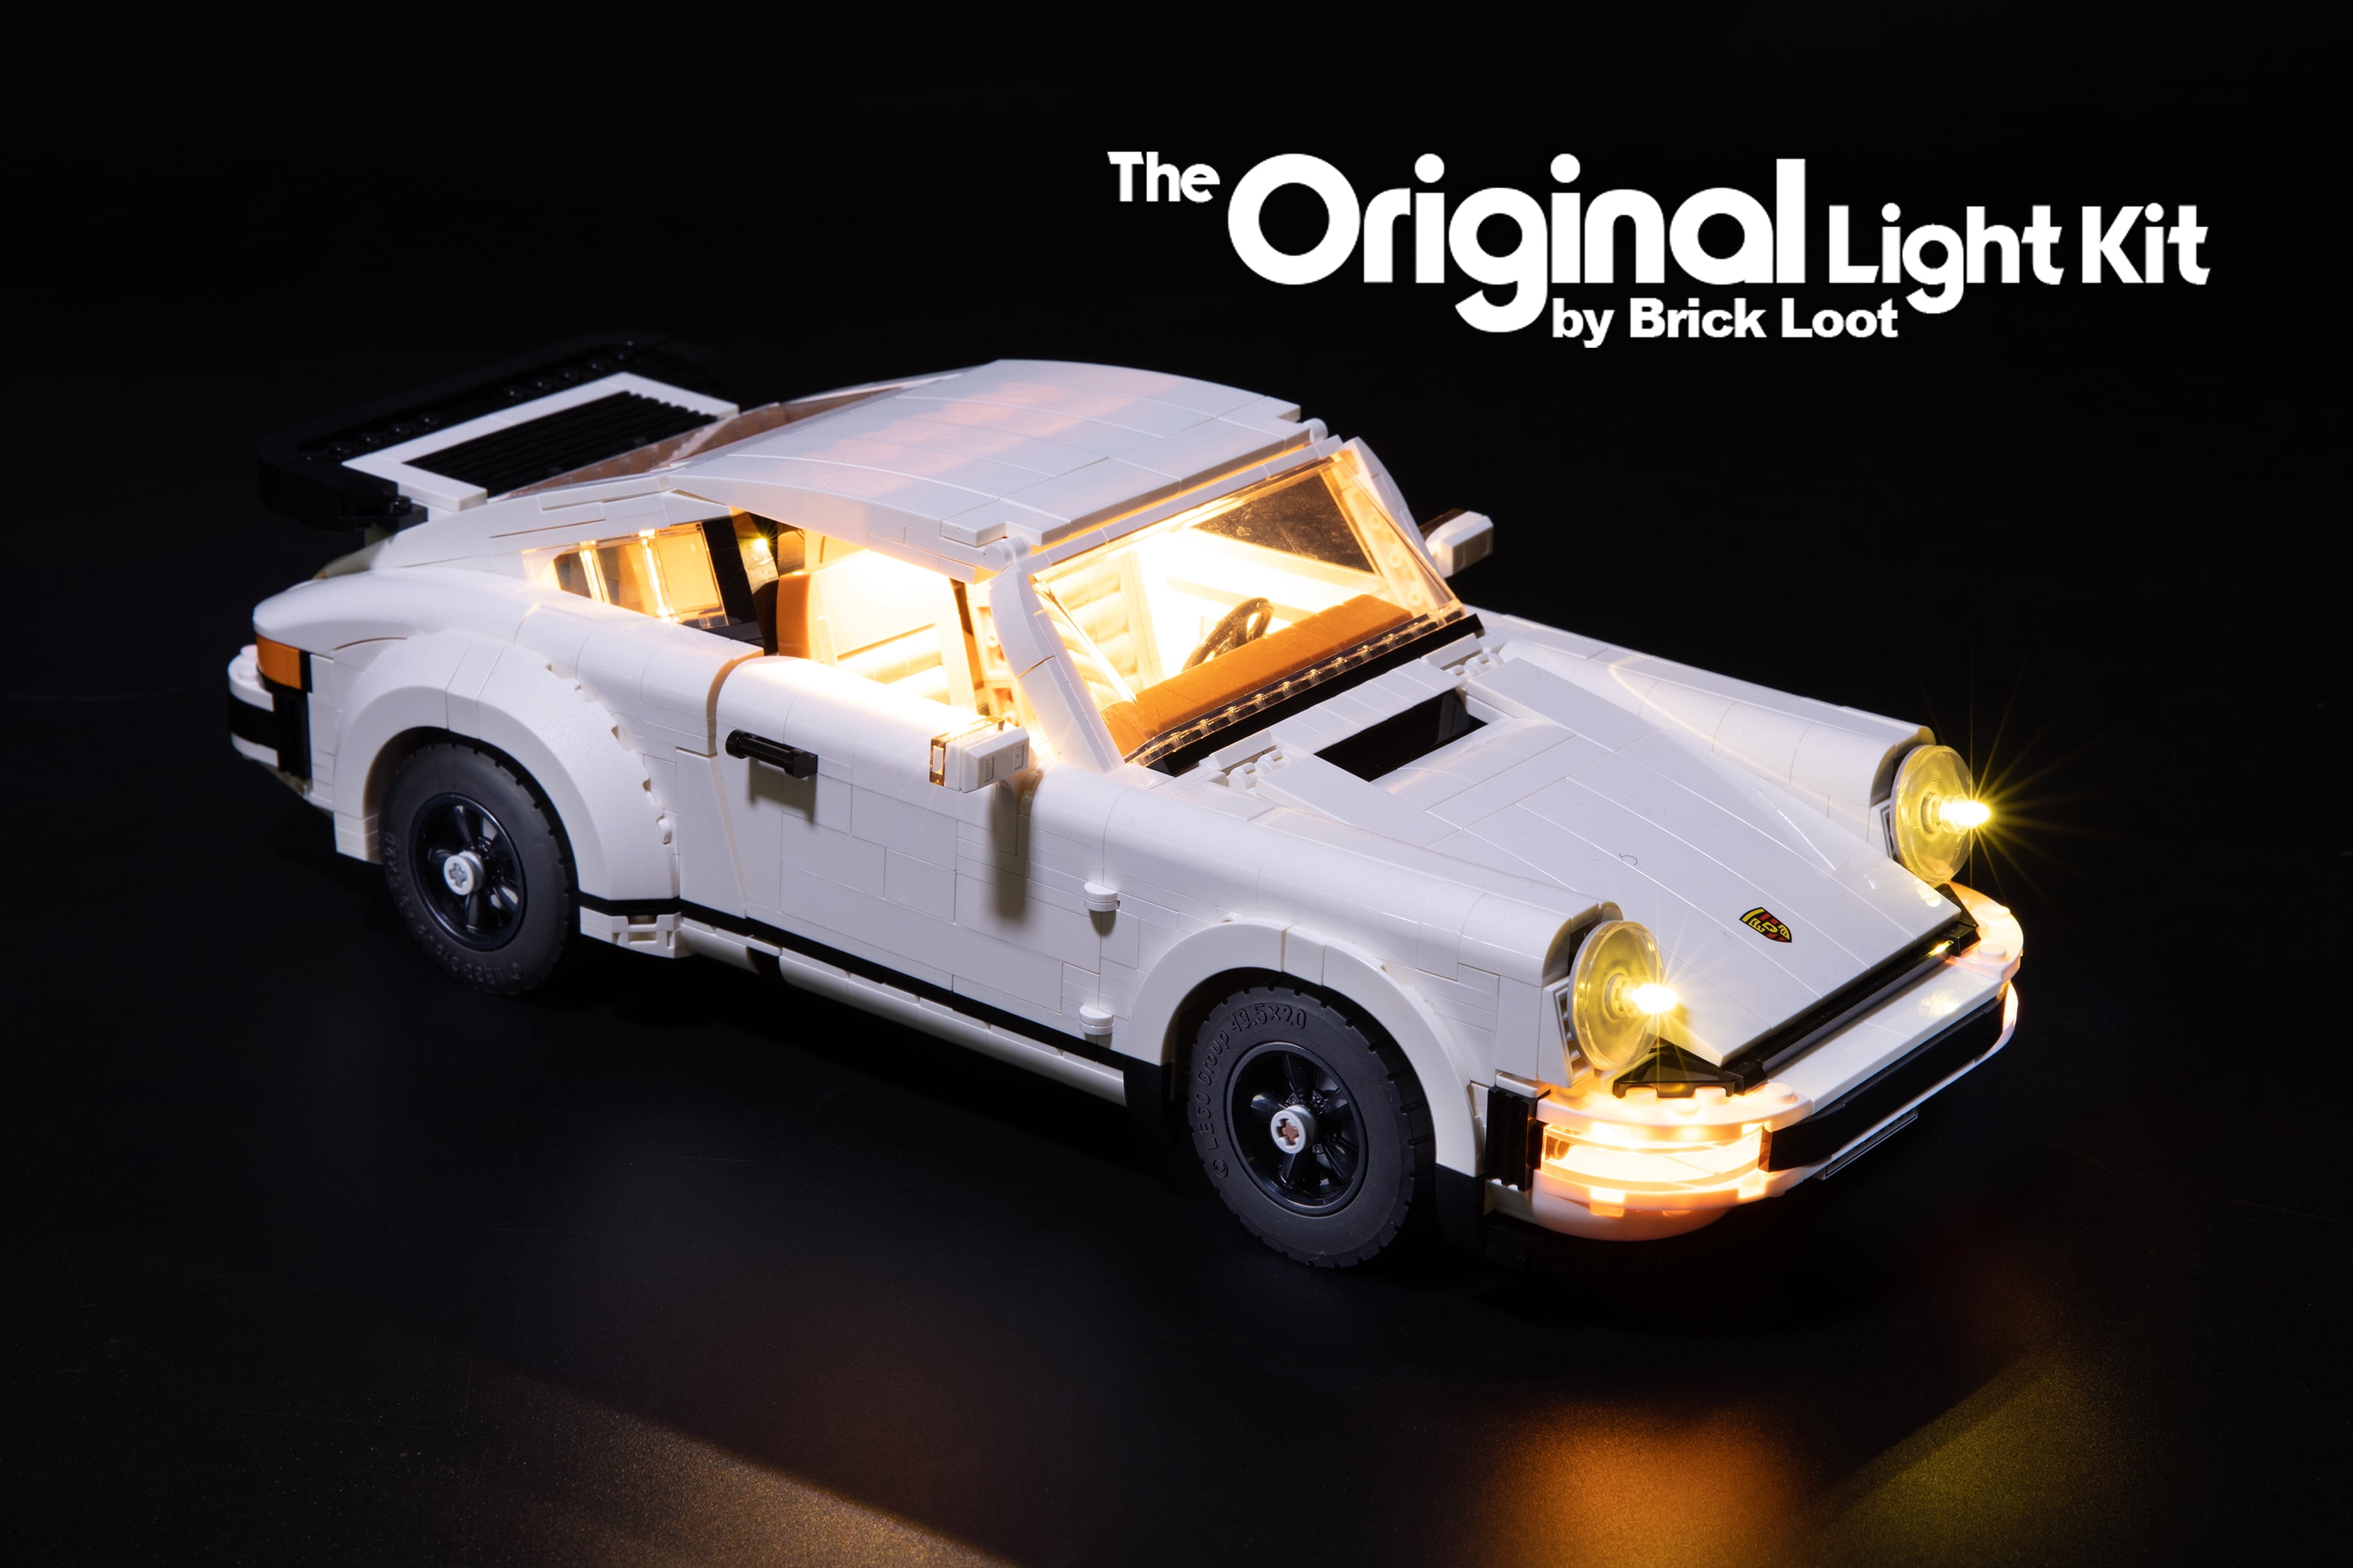 Brick Loot Original LED Light Kit for the LEGO® Porsche set 10295 LEGO set not included Walmart.com